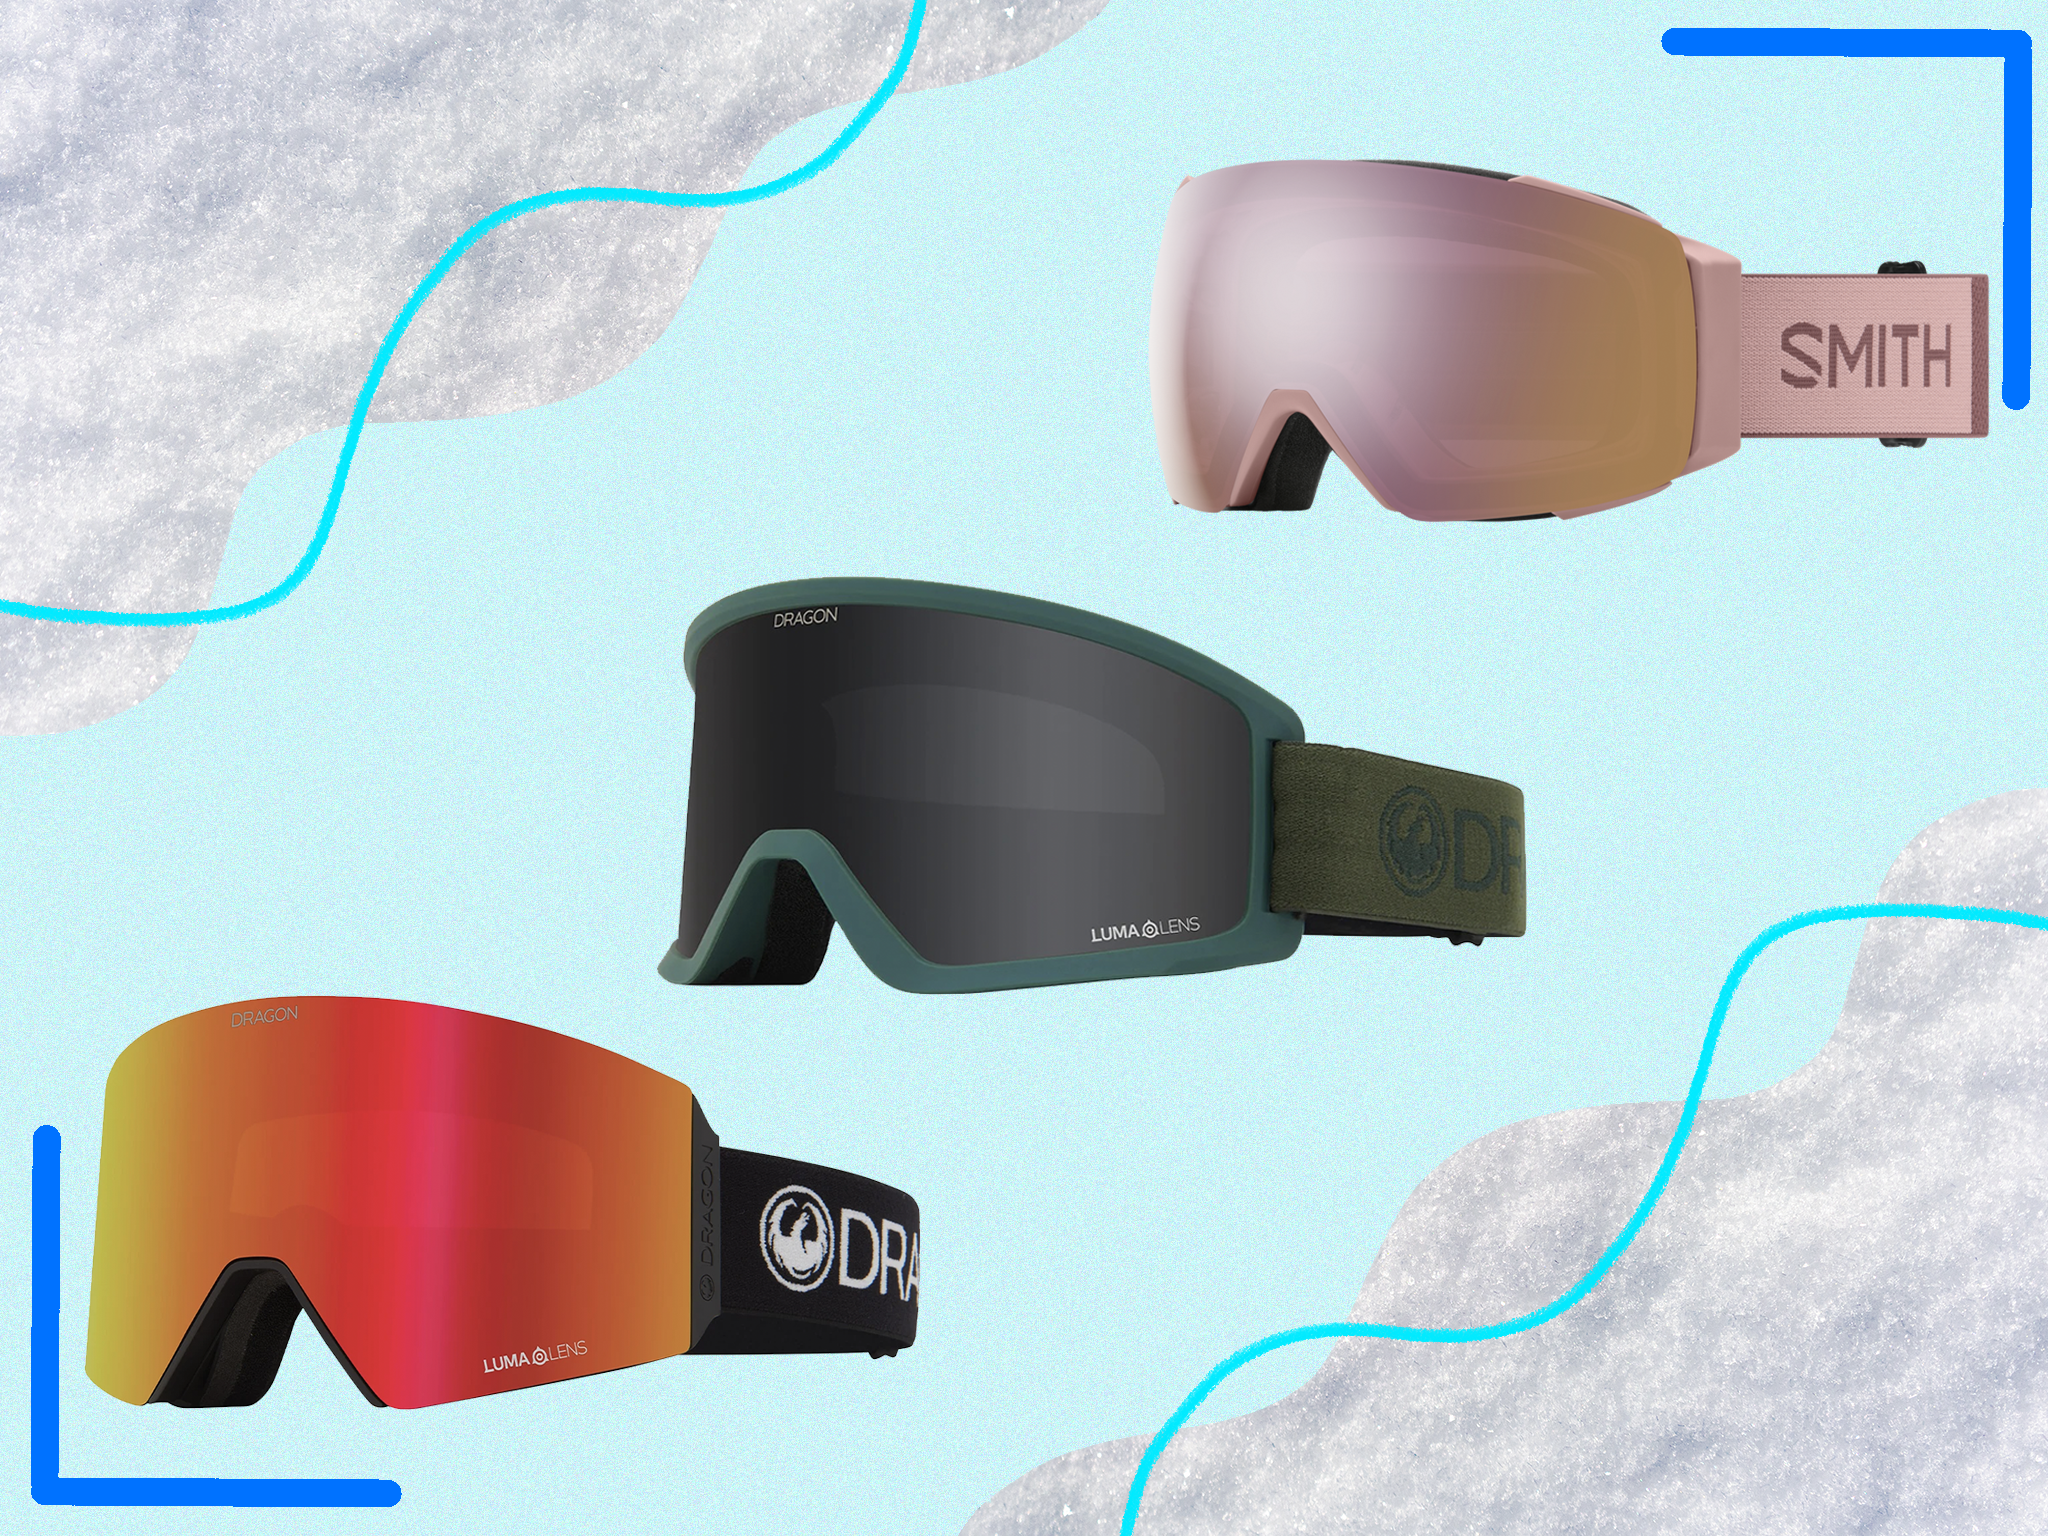 sport Jacket Snow Snowboard Goggles Details about   Ski goggles show original title